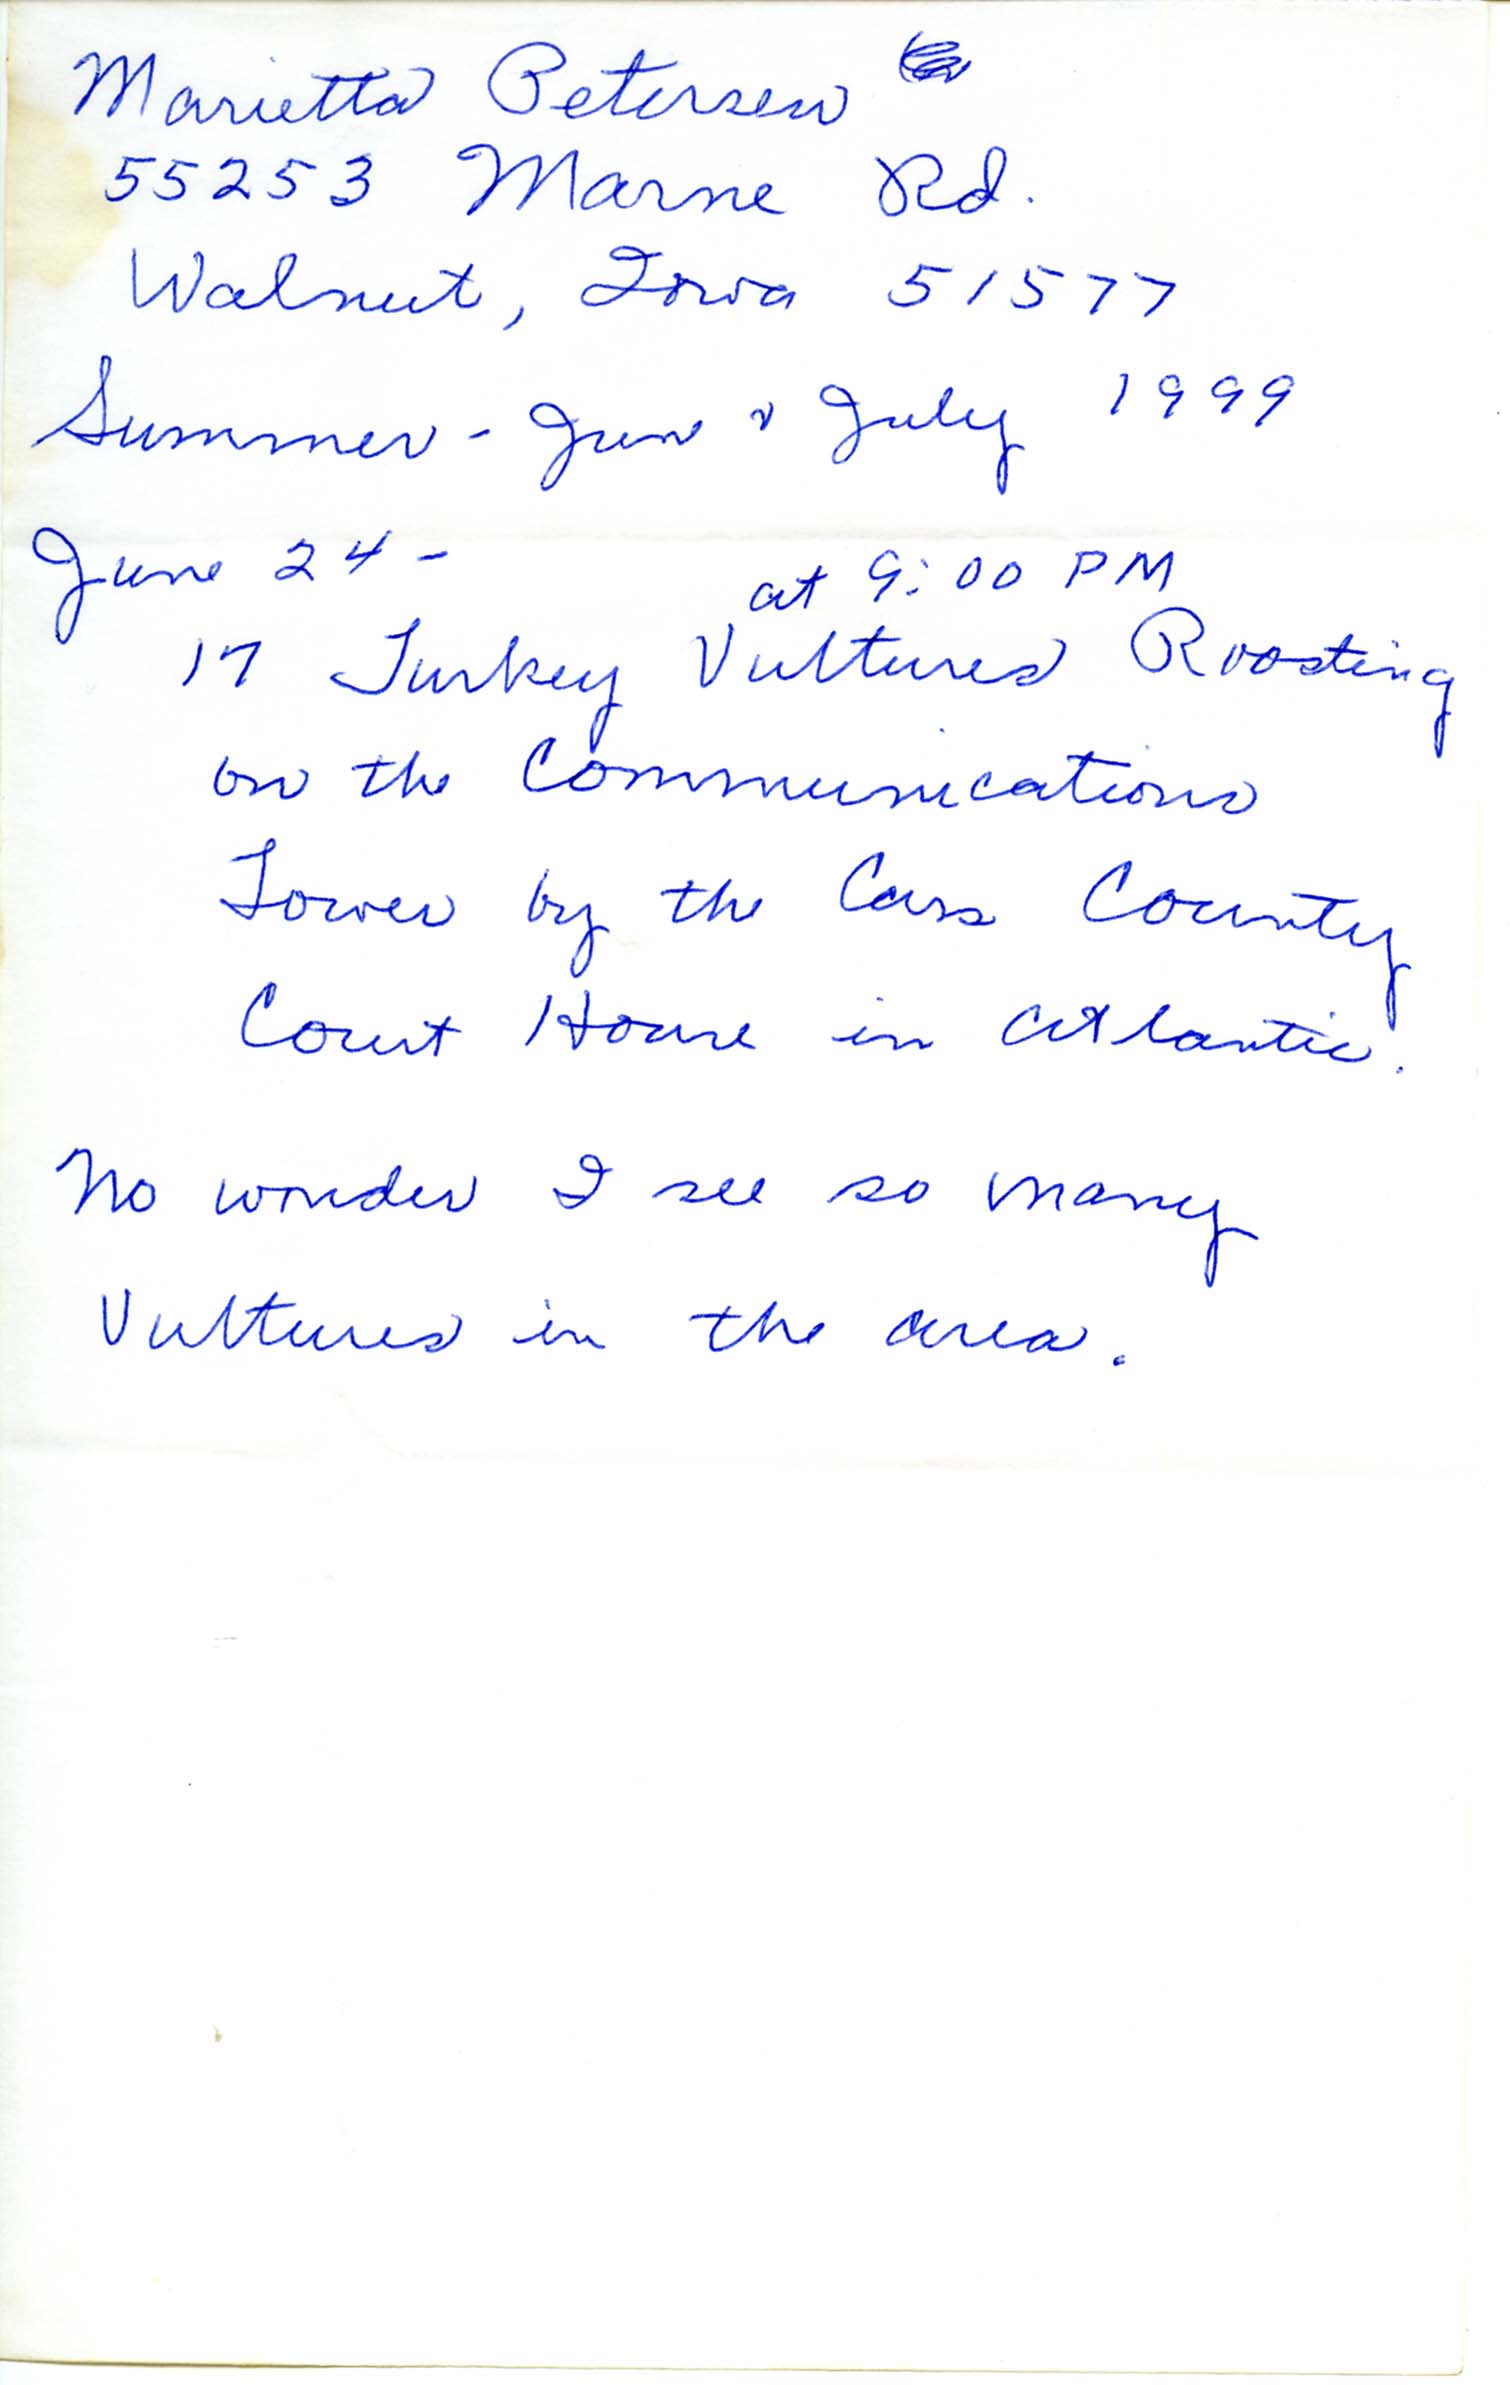 Marietta Petersen note regarding Turkey Vultures, June 24, 1999